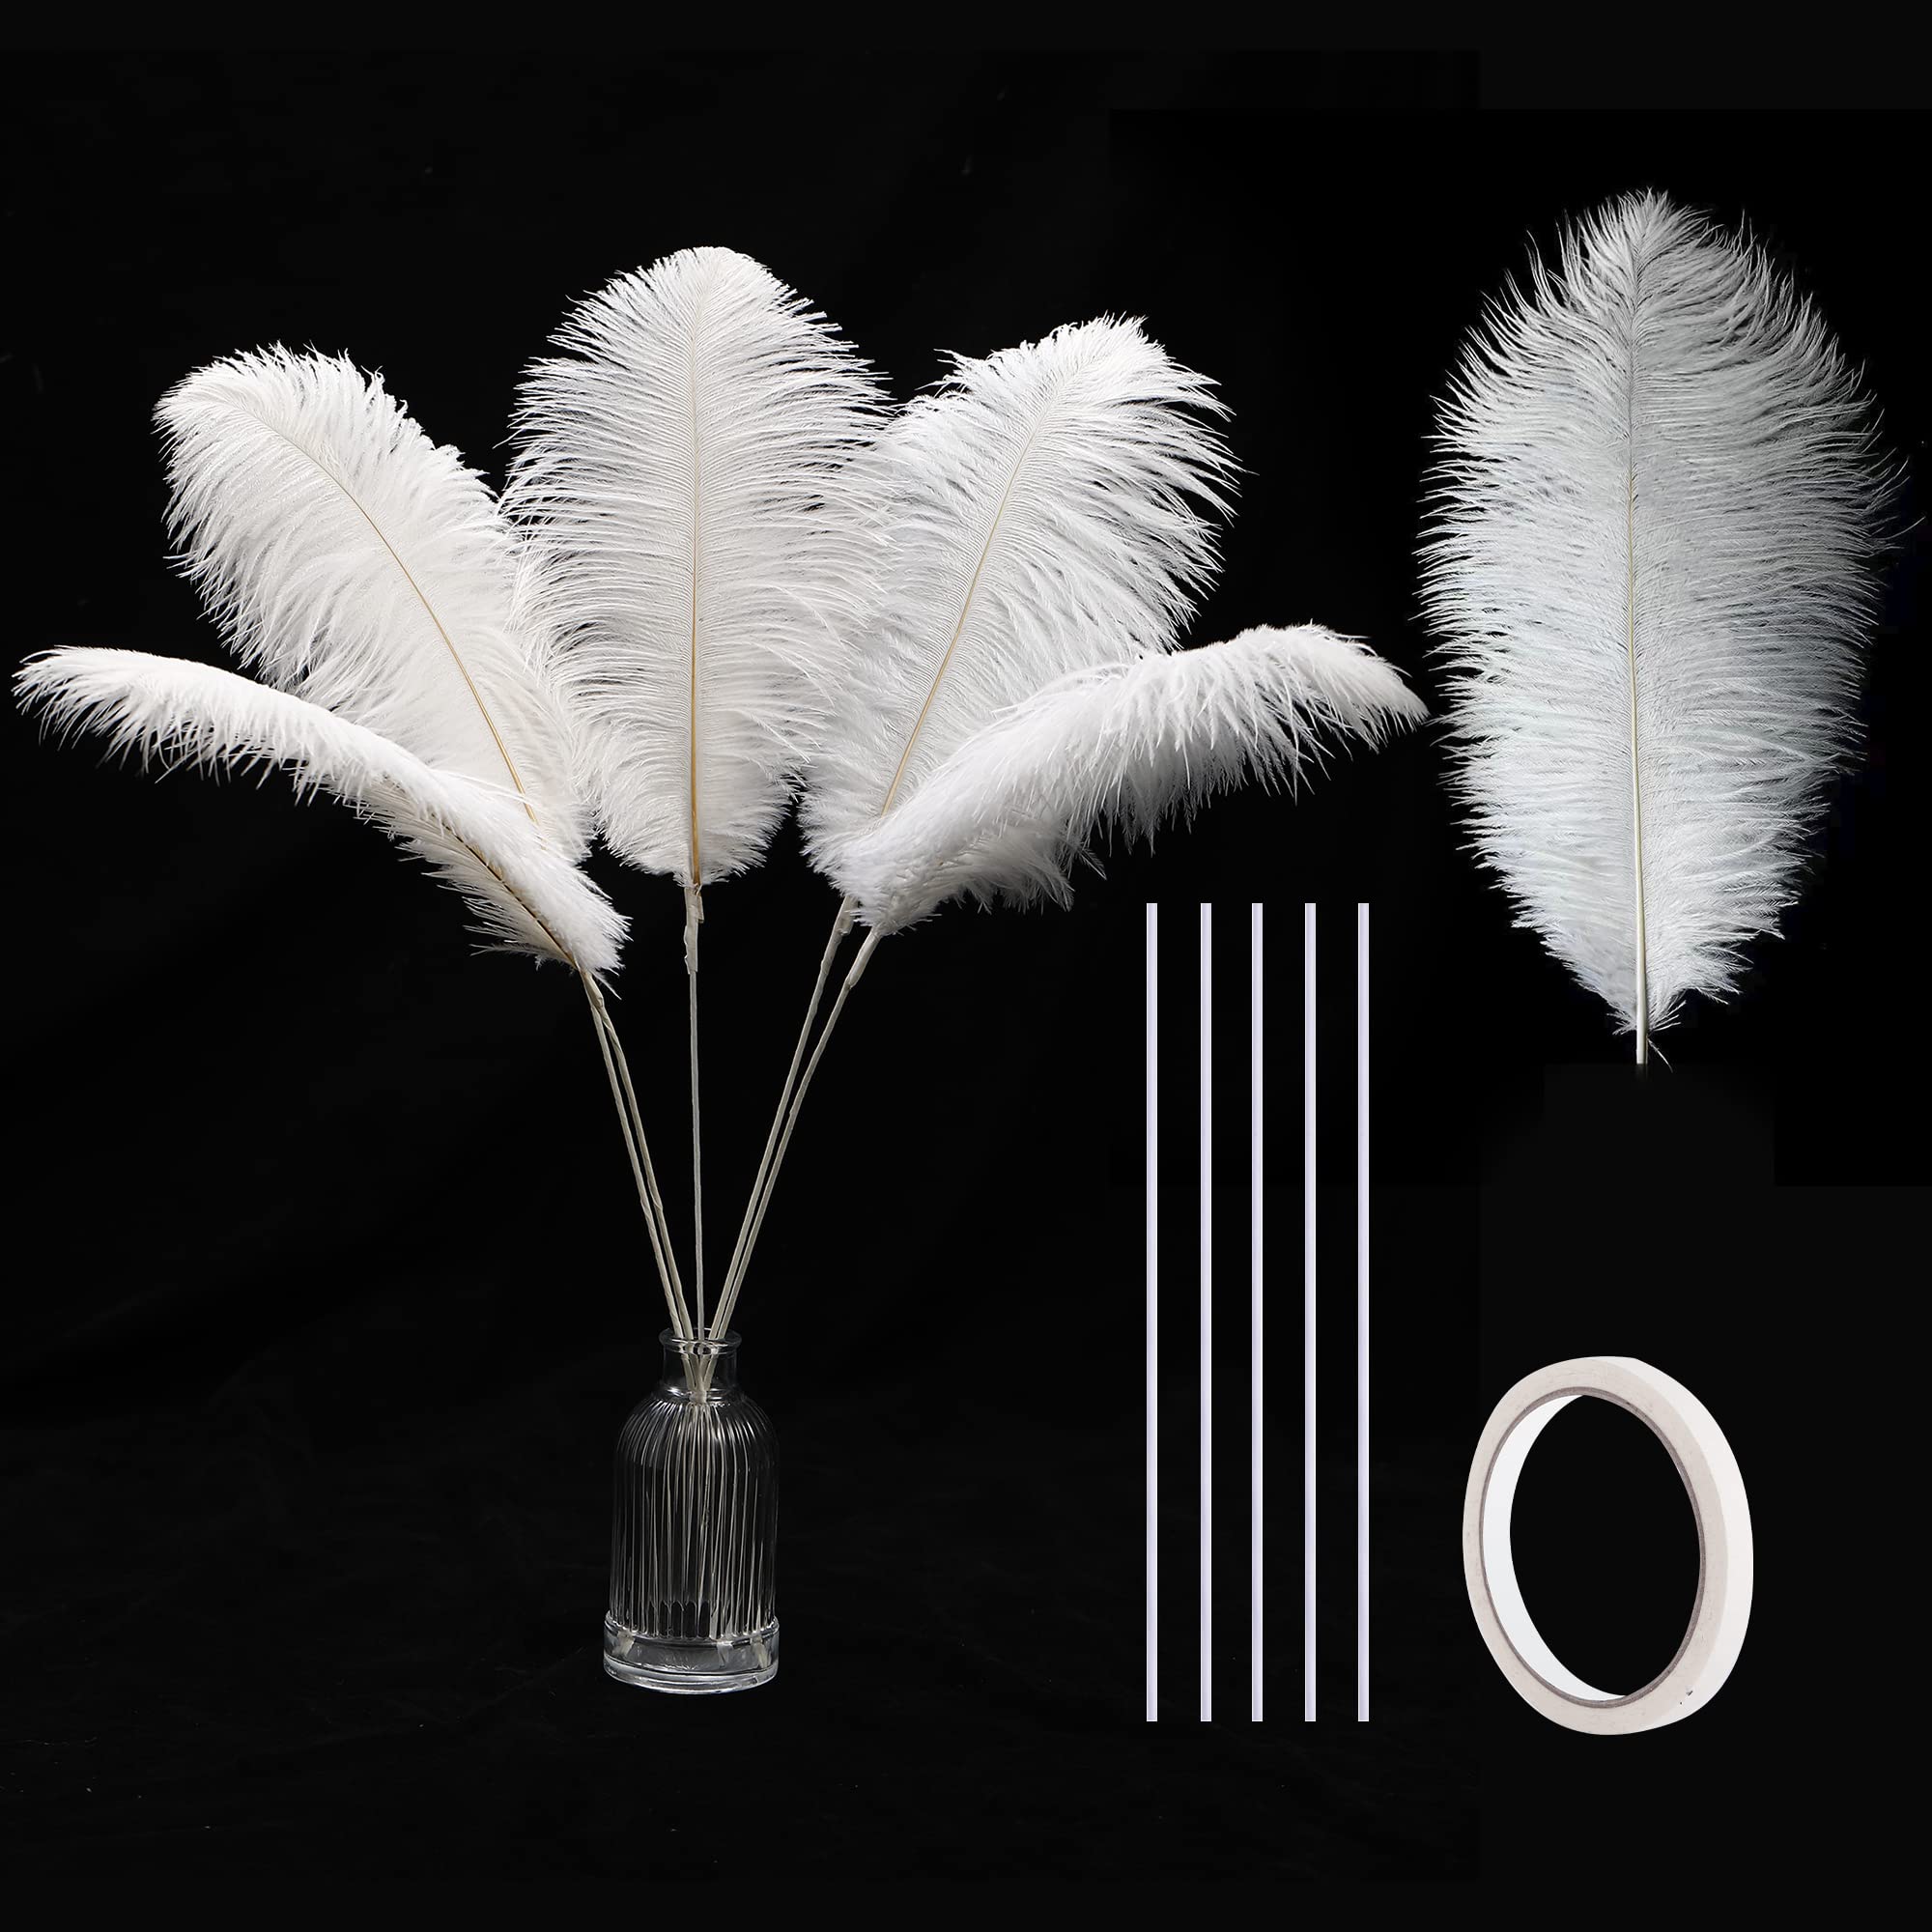 Holmgren White Ostrich Feathers Bulk - 20pcs Making Kit 22 Inch